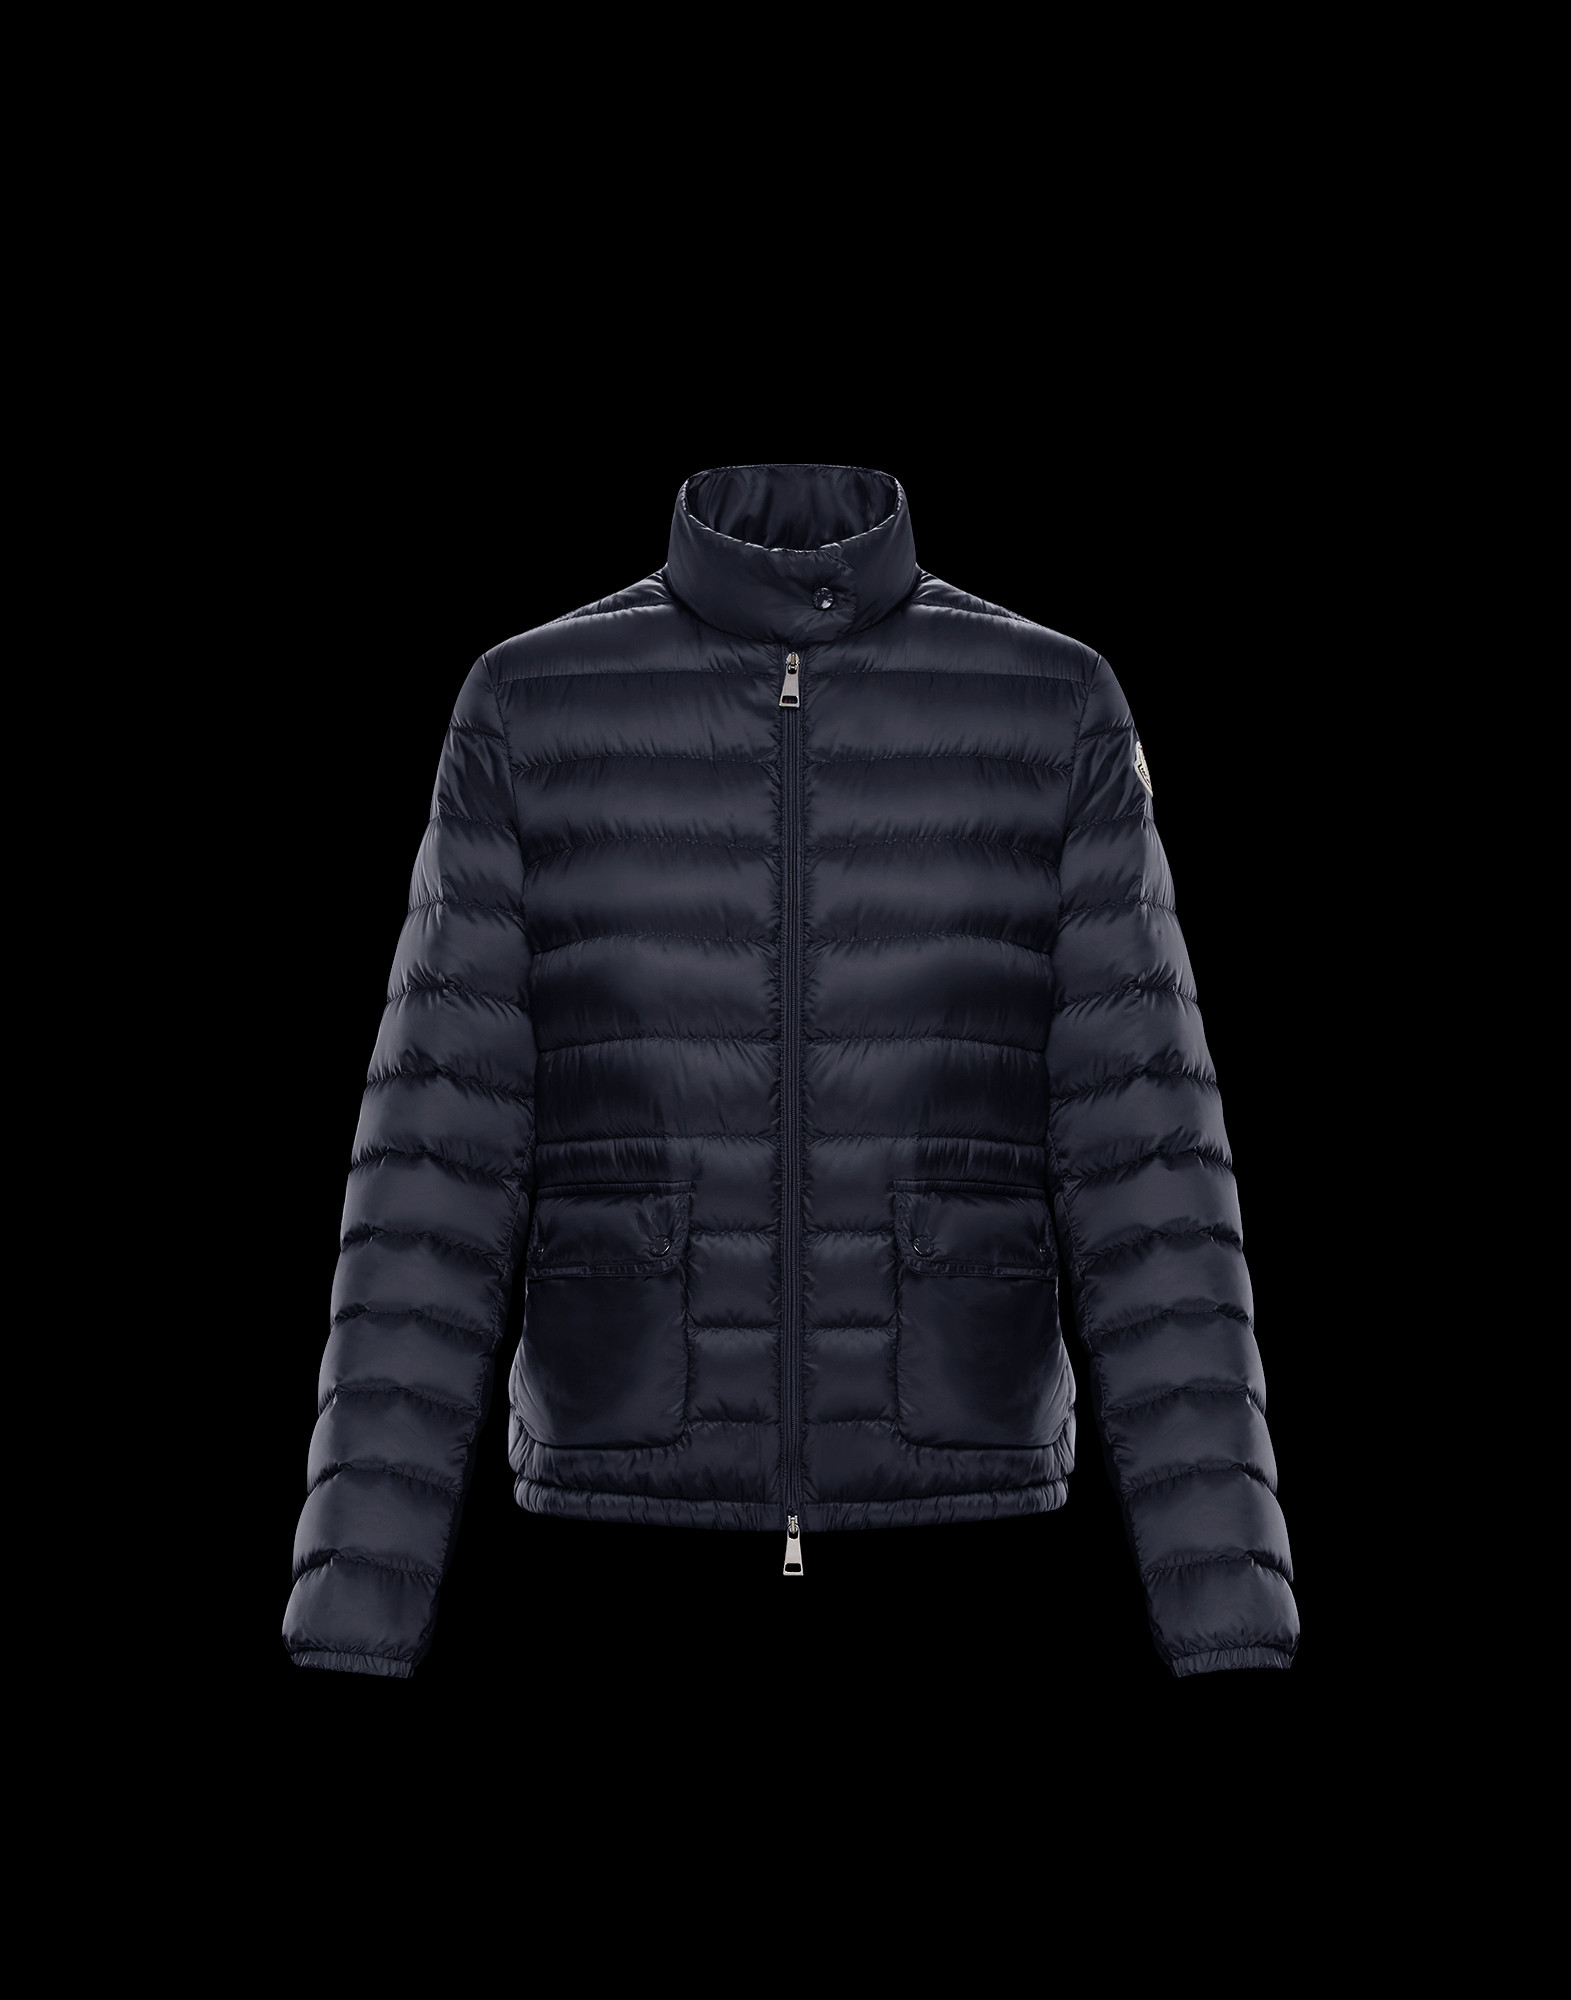 moncler coats on sale online